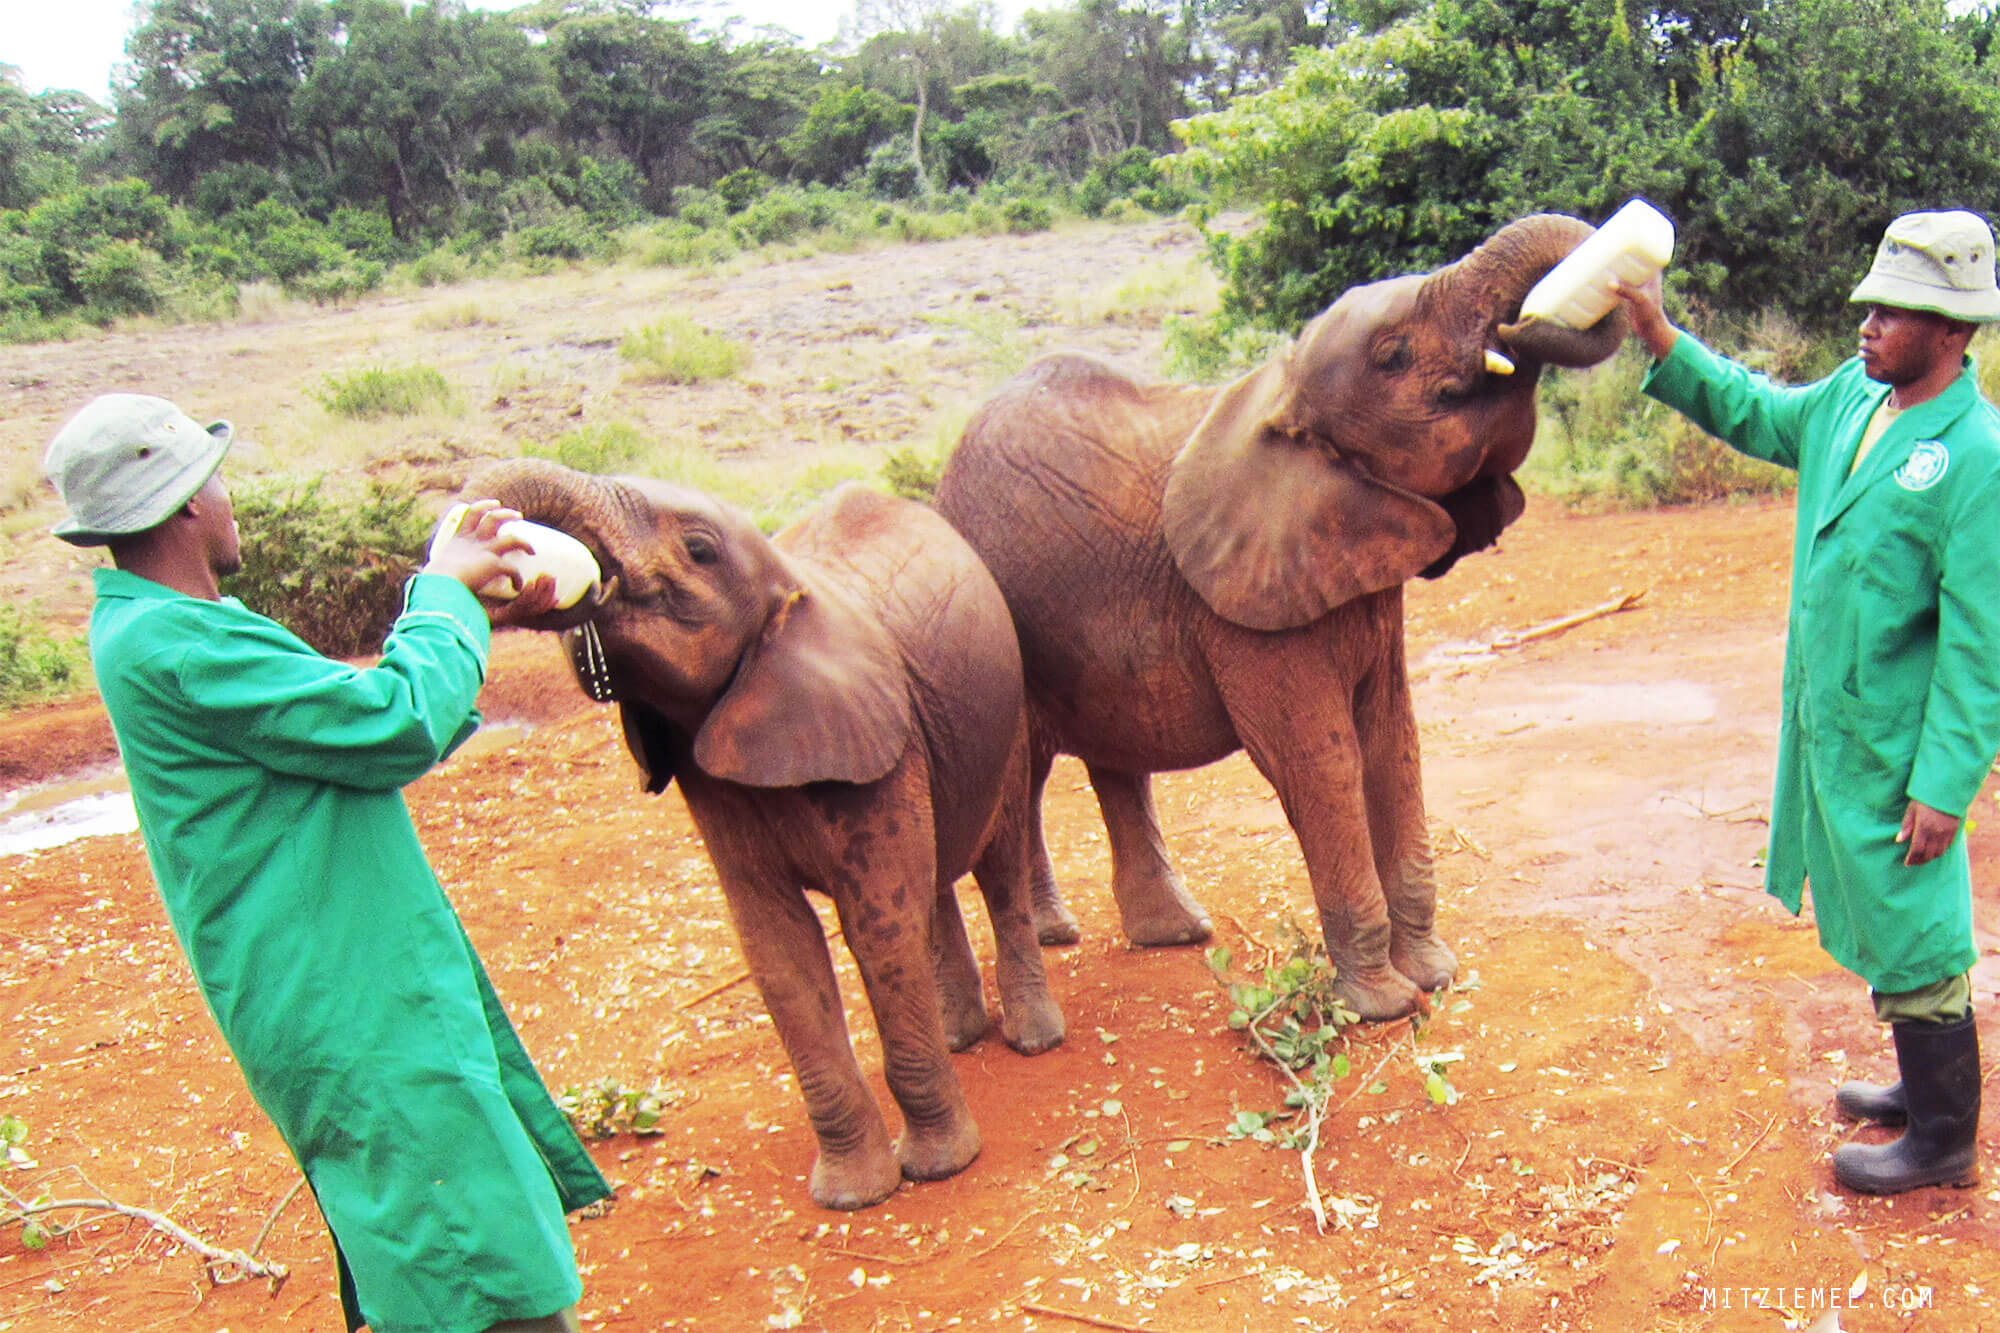 The Elephant Nursery at the Sheldrick Wildlife Trust in Nairobi